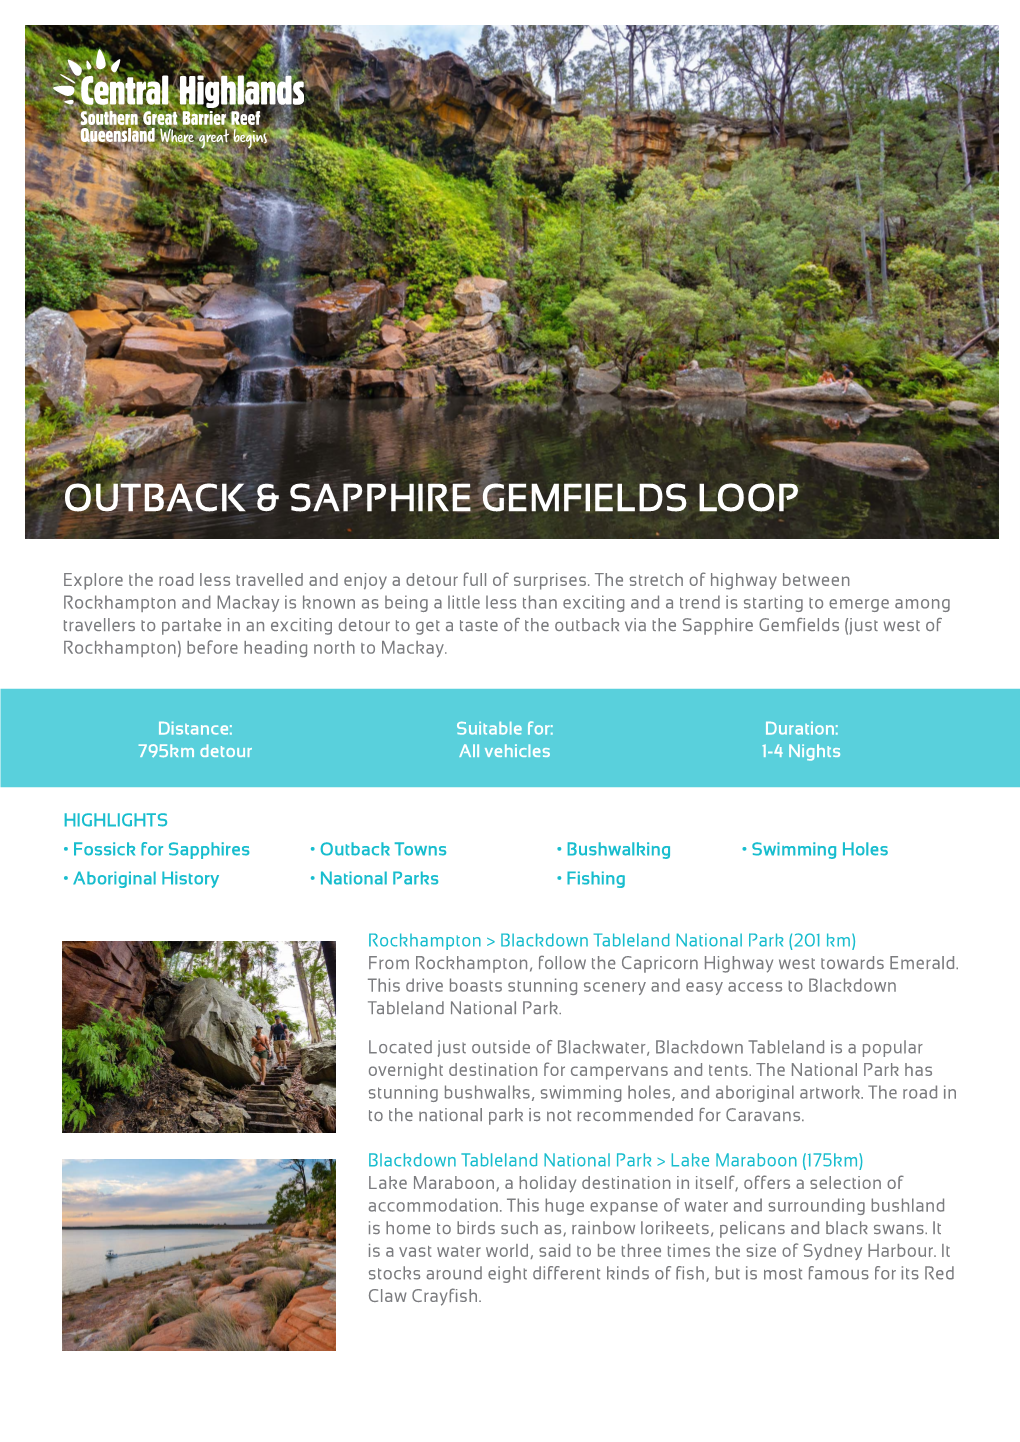 Outback & Sapphire Gemfields Loop